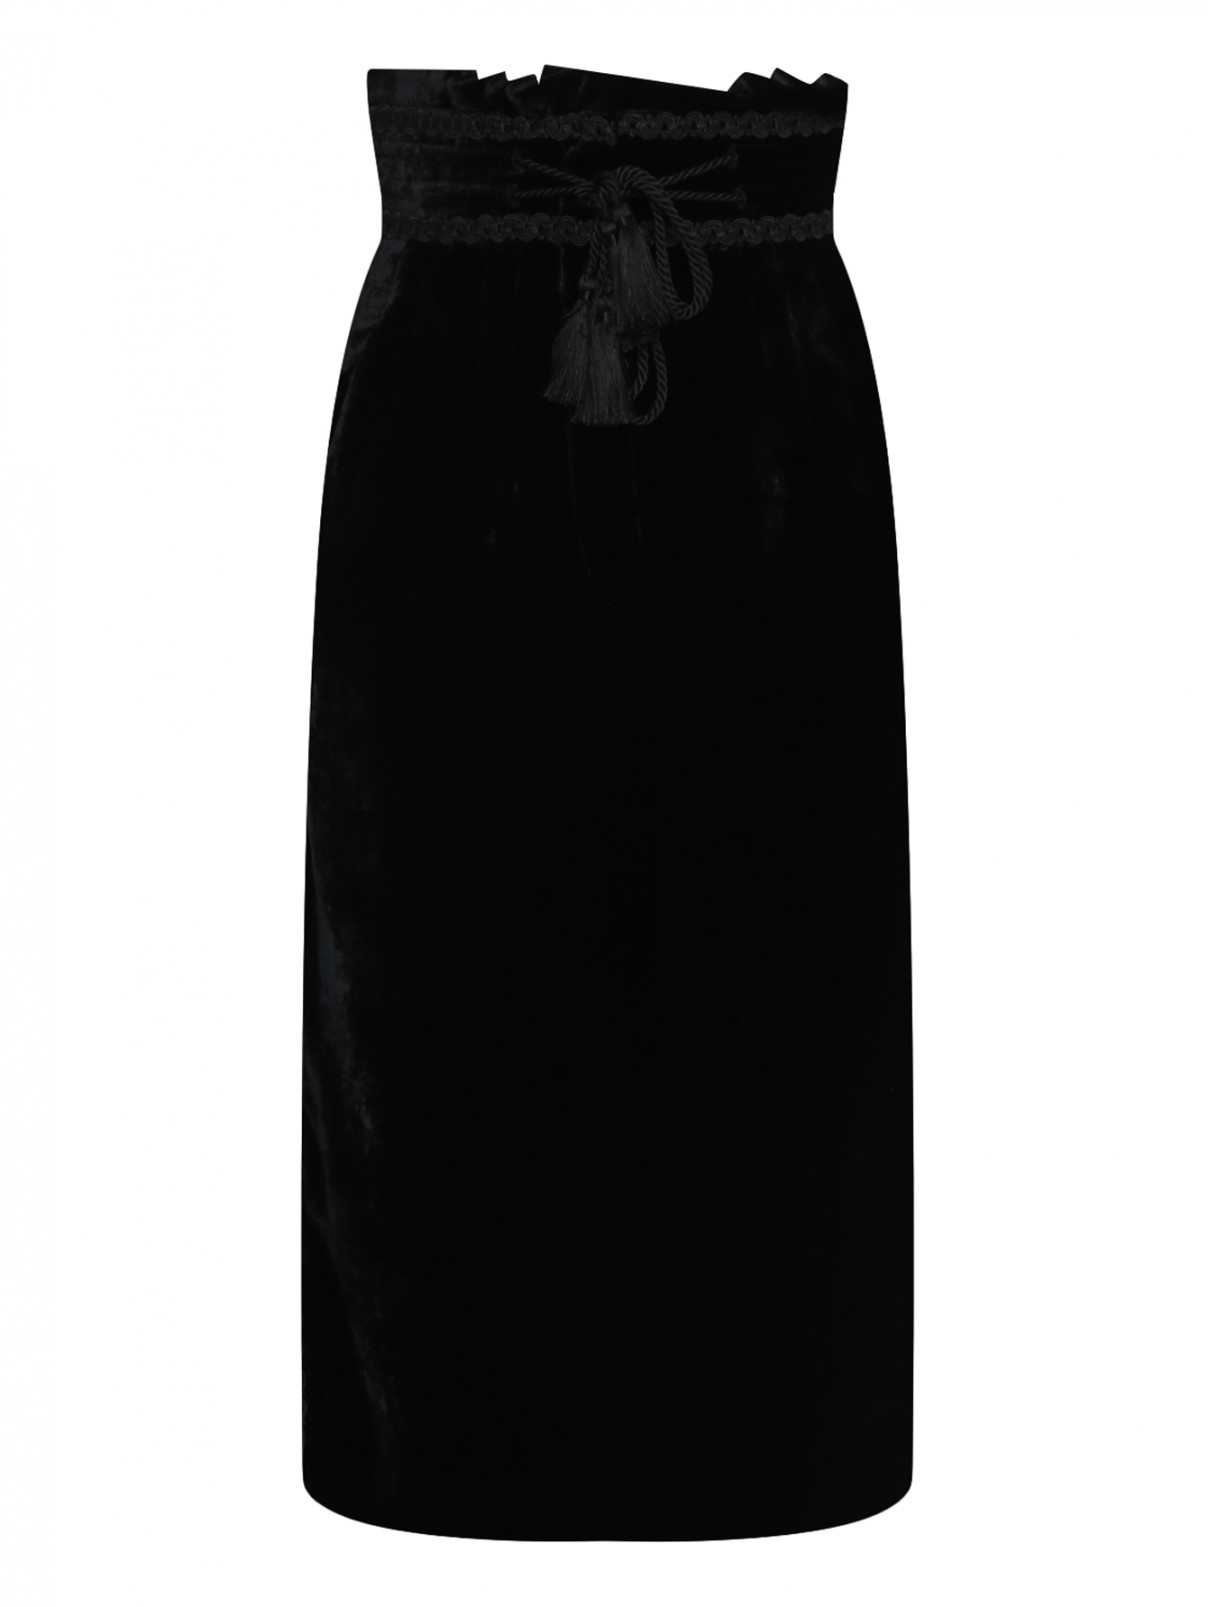 Бархатная юбка из шелка с бахромой Alberta Ferretti  –  Общий вид  – Цвет:  Черный